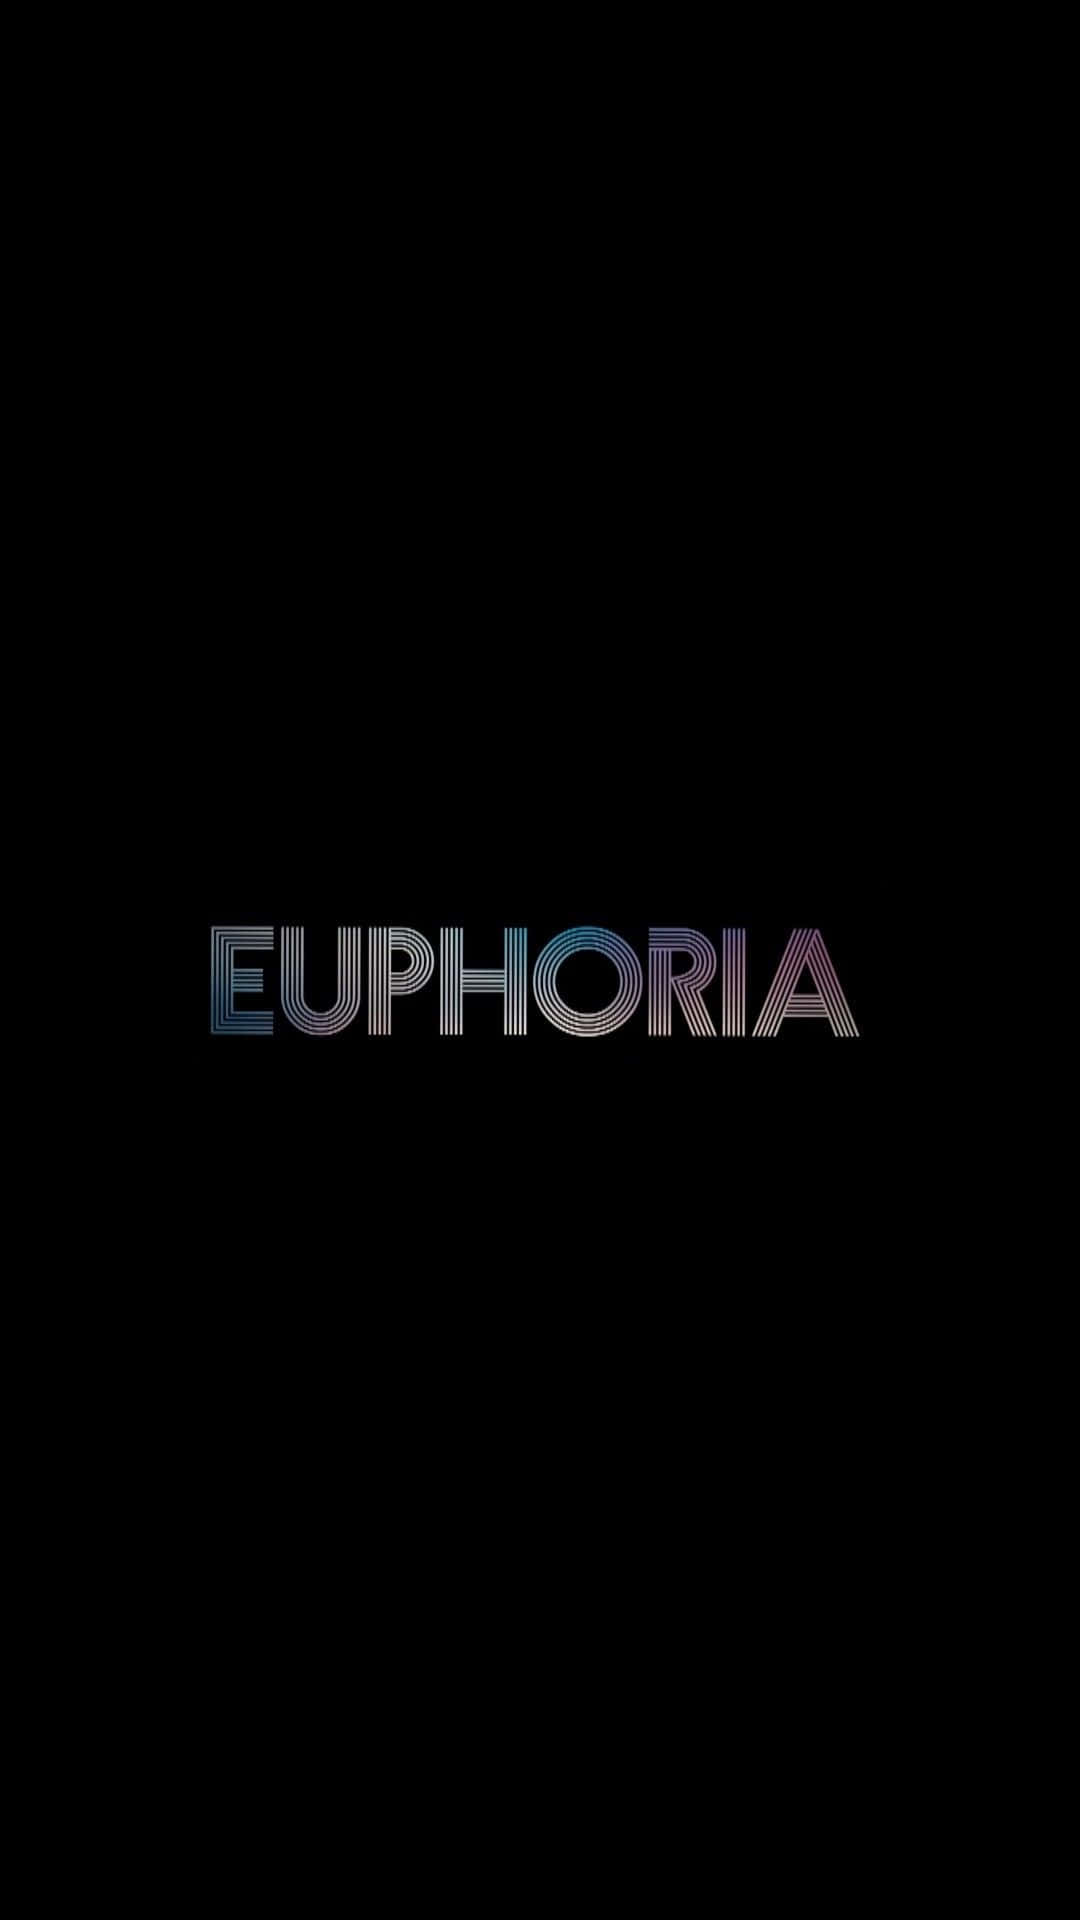 Euphoria Logo On A Black Background Wallpaper